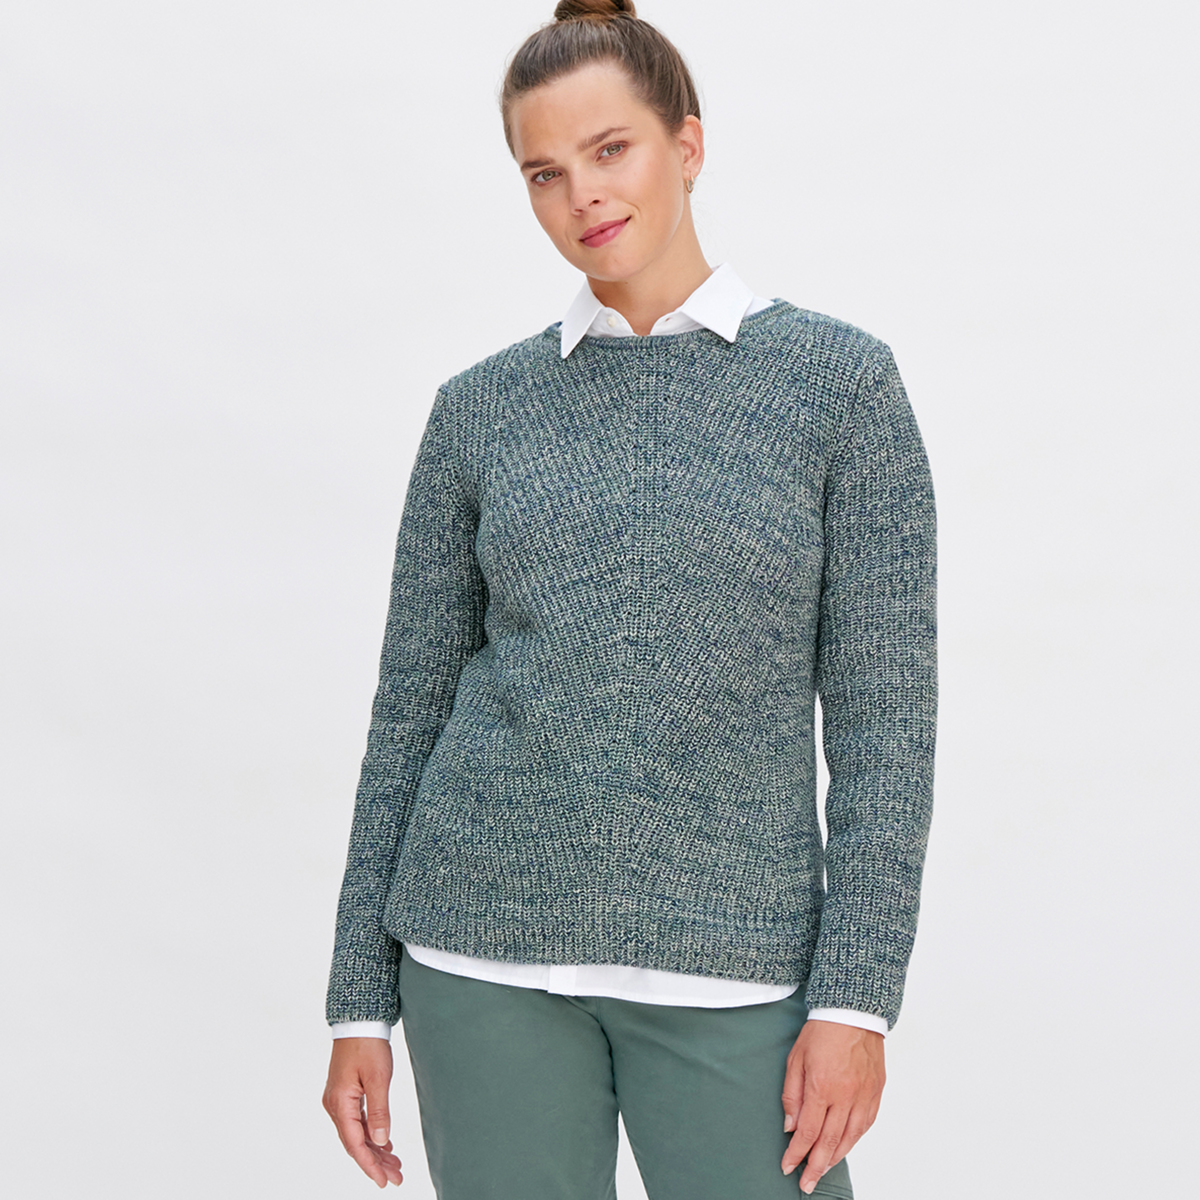 Multicolor Women Sweater